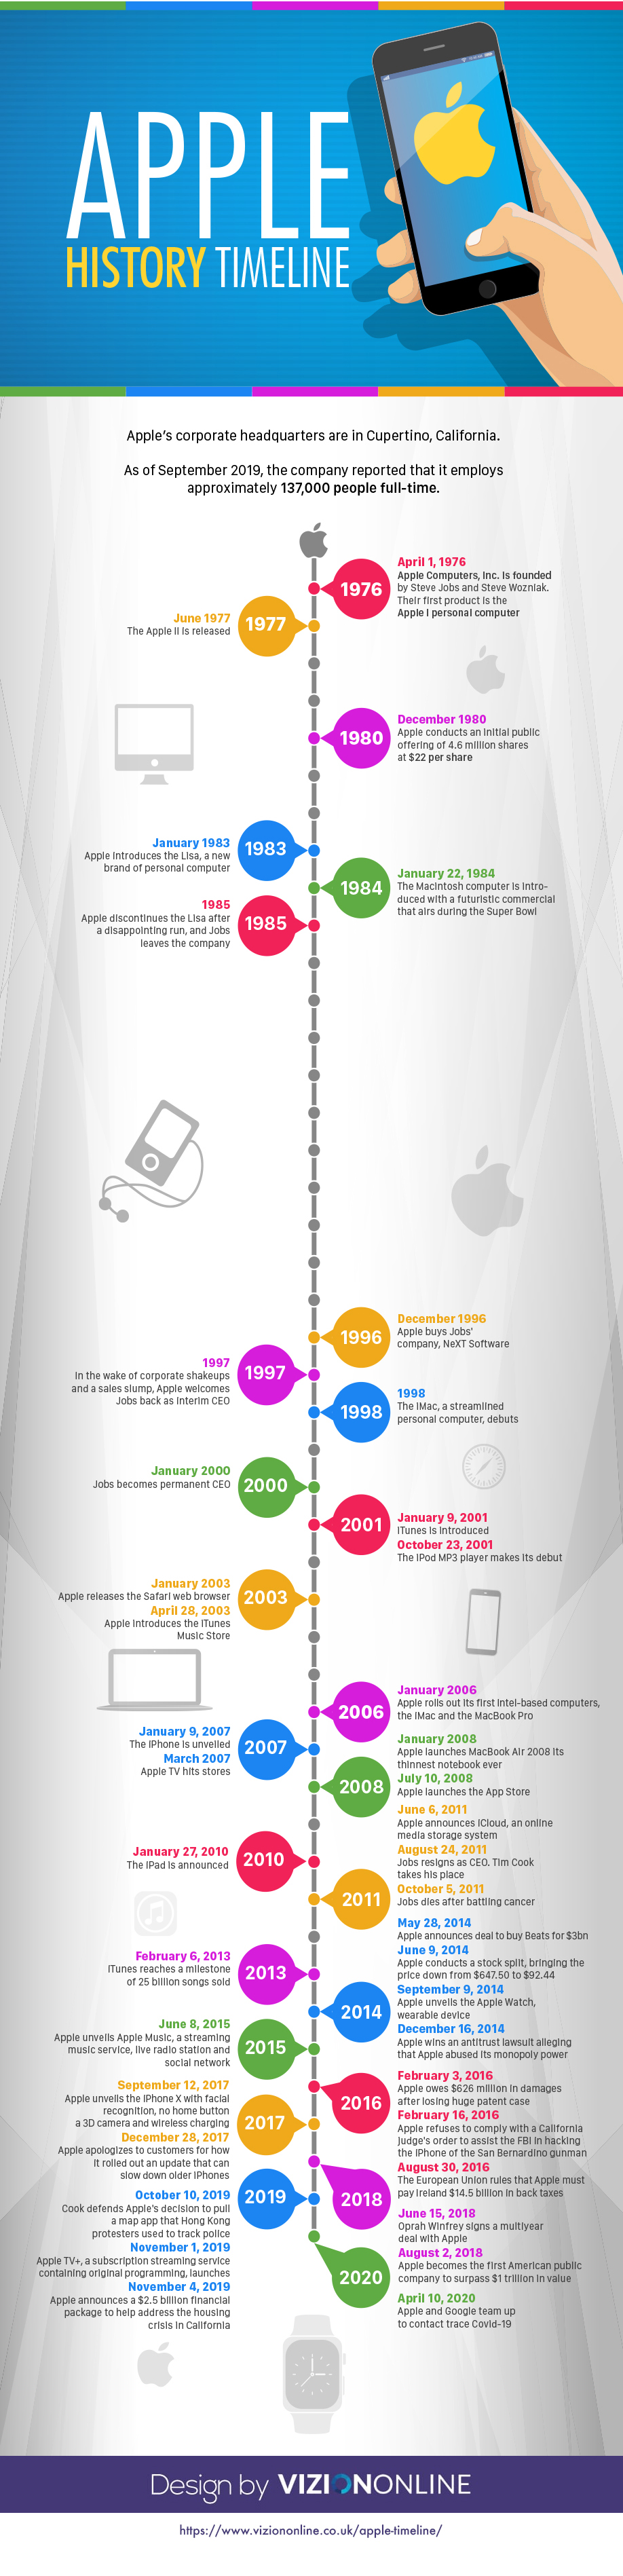 Apple History Timeline